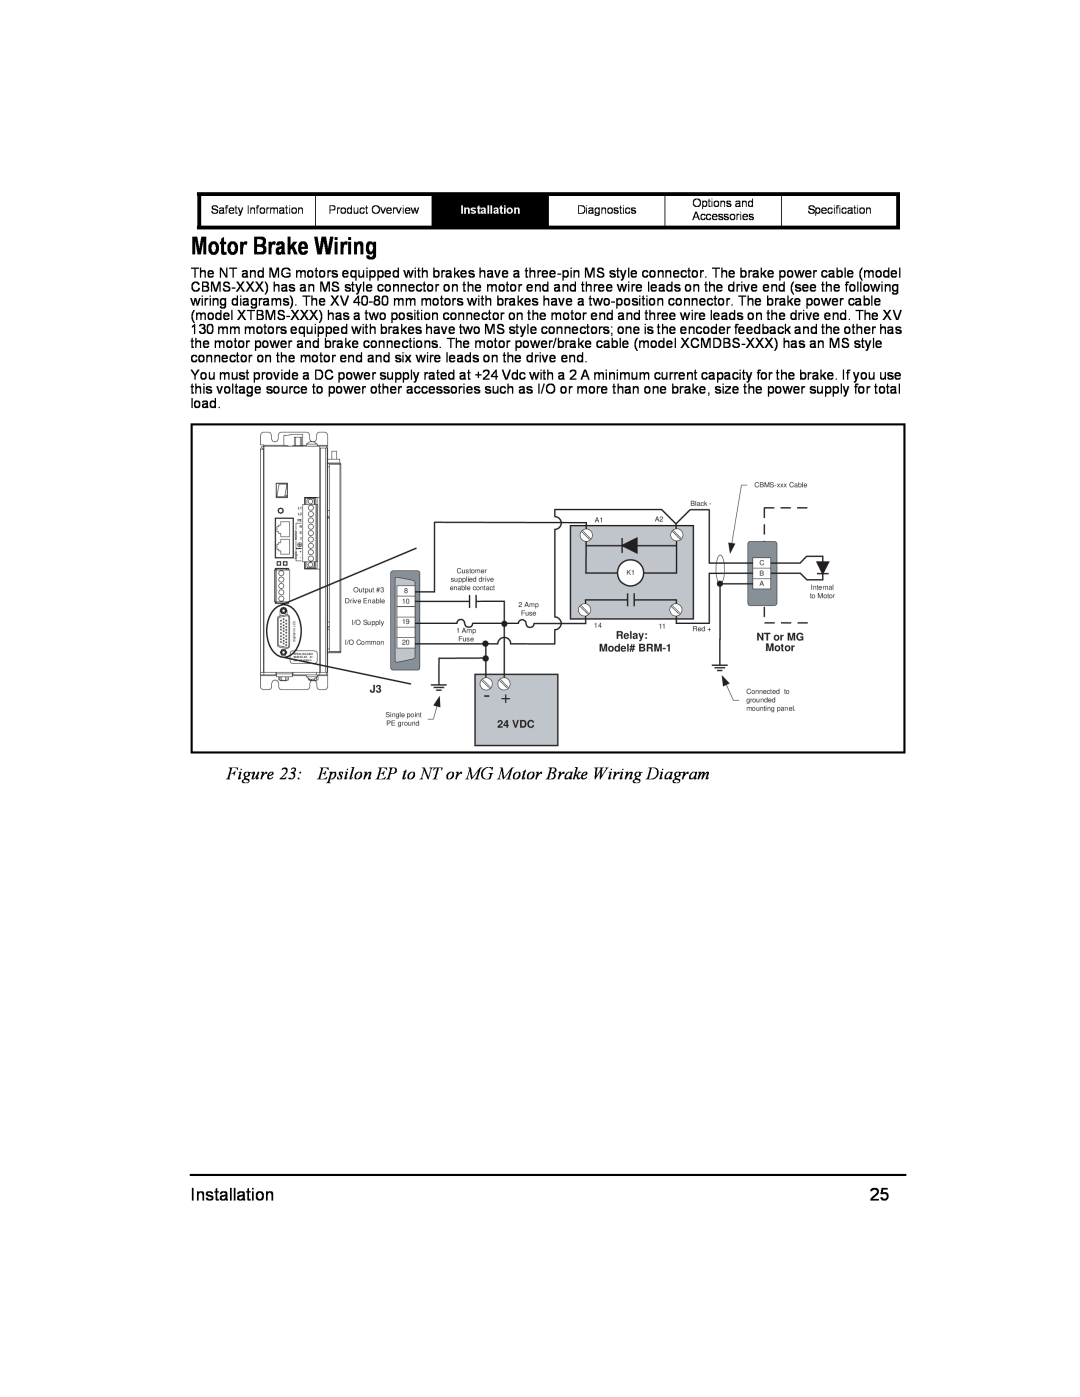 Emerson 400518-01 installation manual Epsilon EP to NT or MG Motor Brake Wiring Diagram 